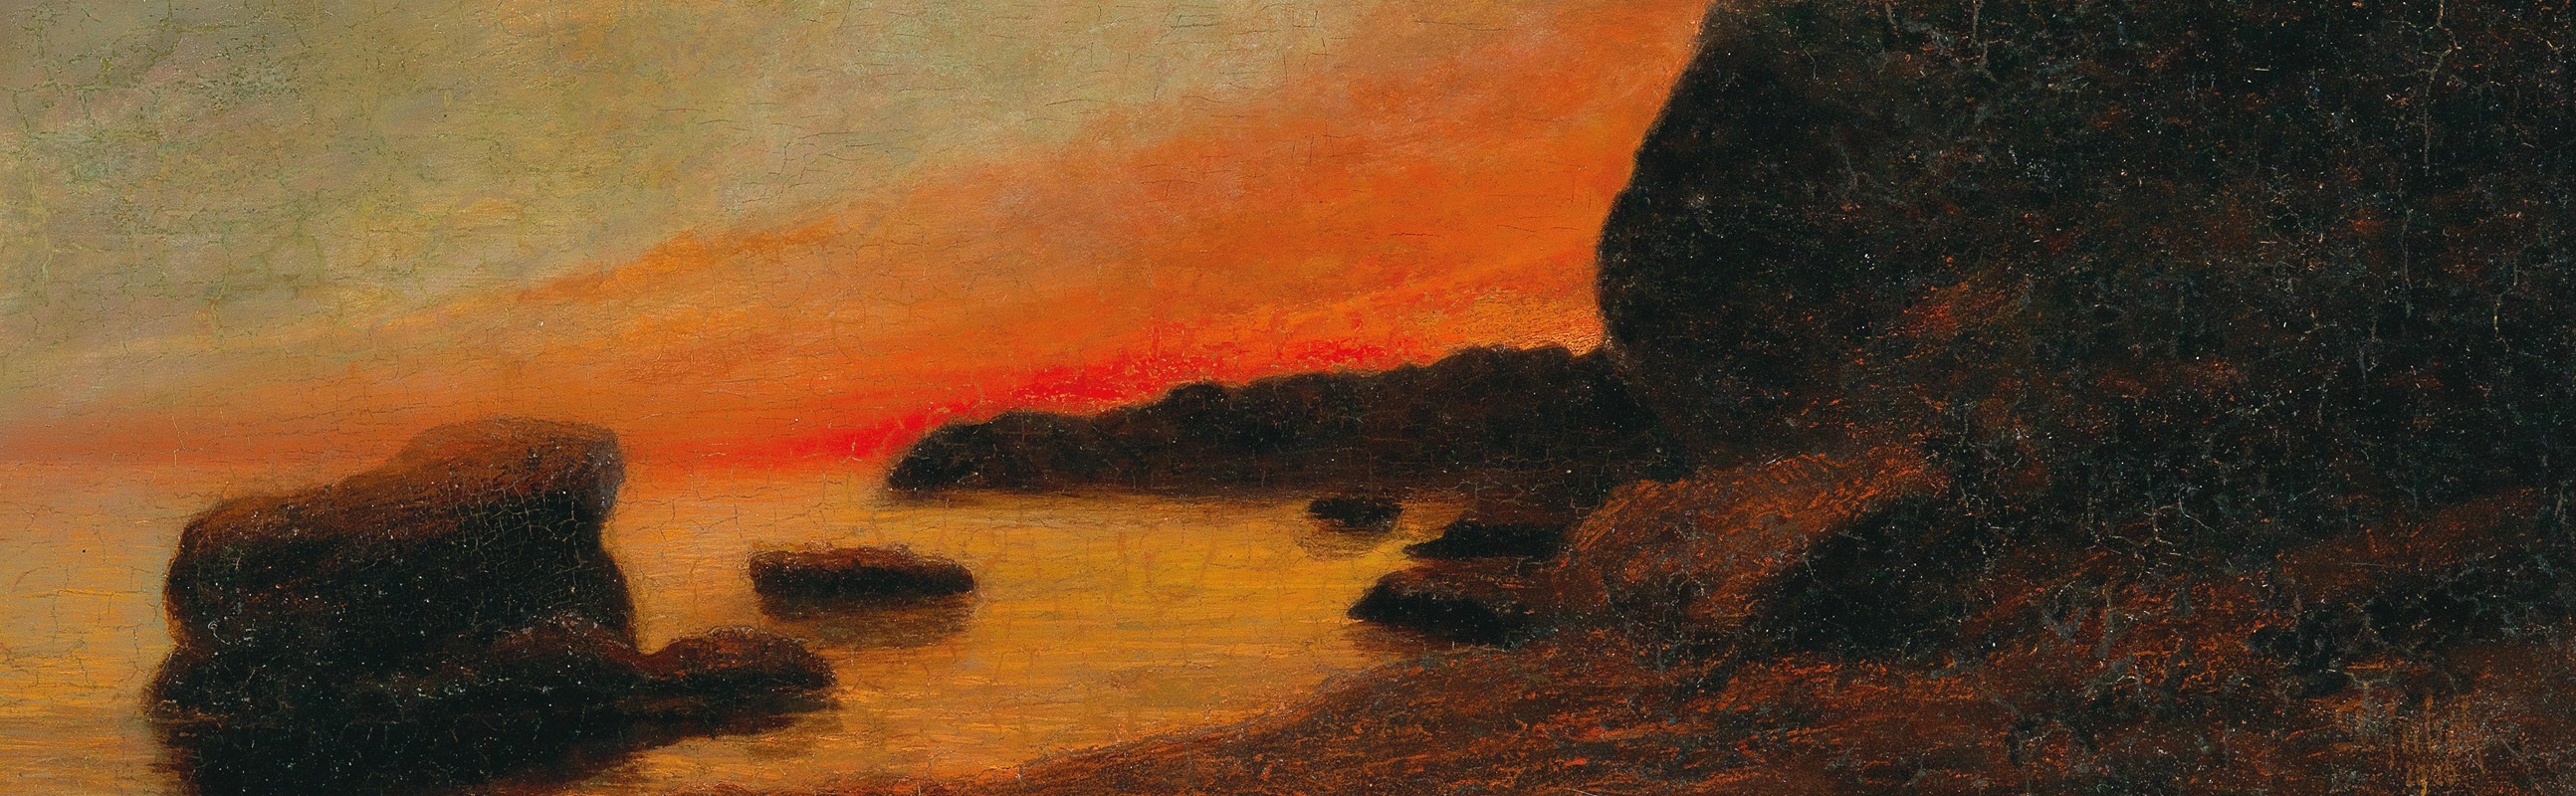 Karl Wilhelm Diefenbach - Sunset on the coast of Capri